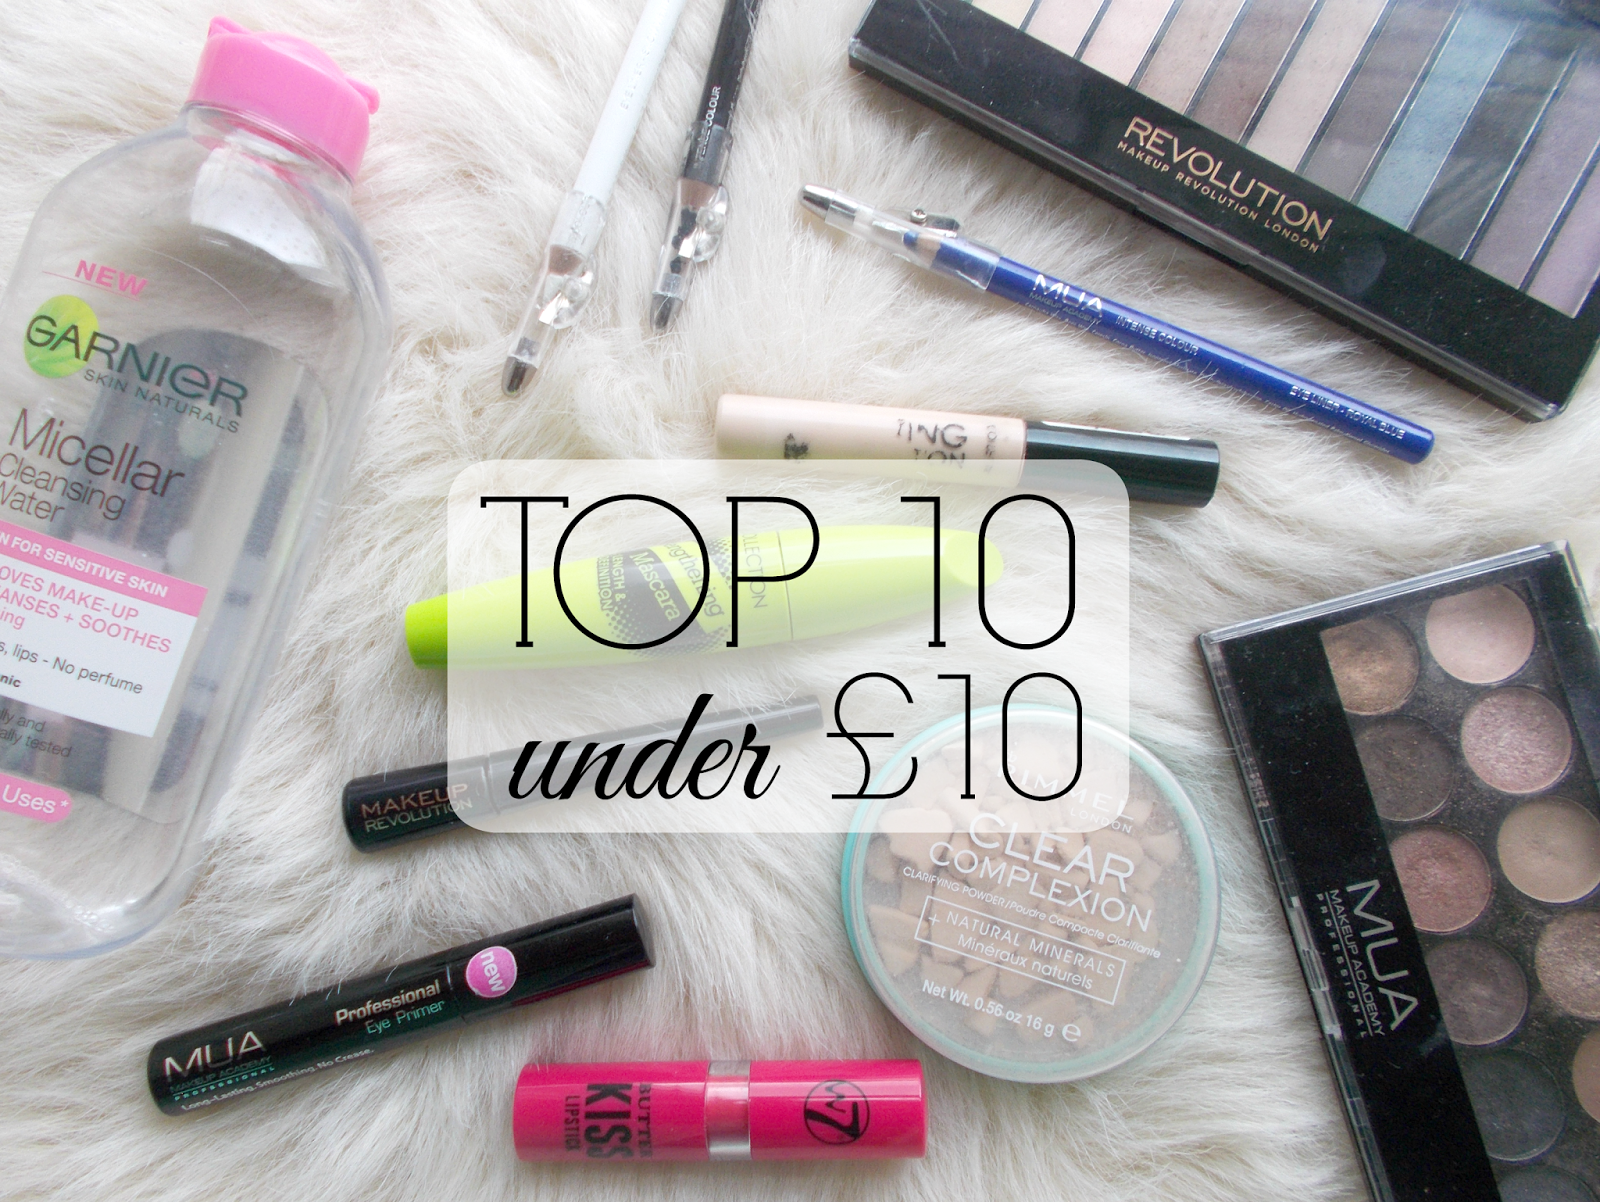 top 10 makeup products under £10 #irishblogcollab budget drugstore beauty makeup revolution collection mua rimmel w7 garnier